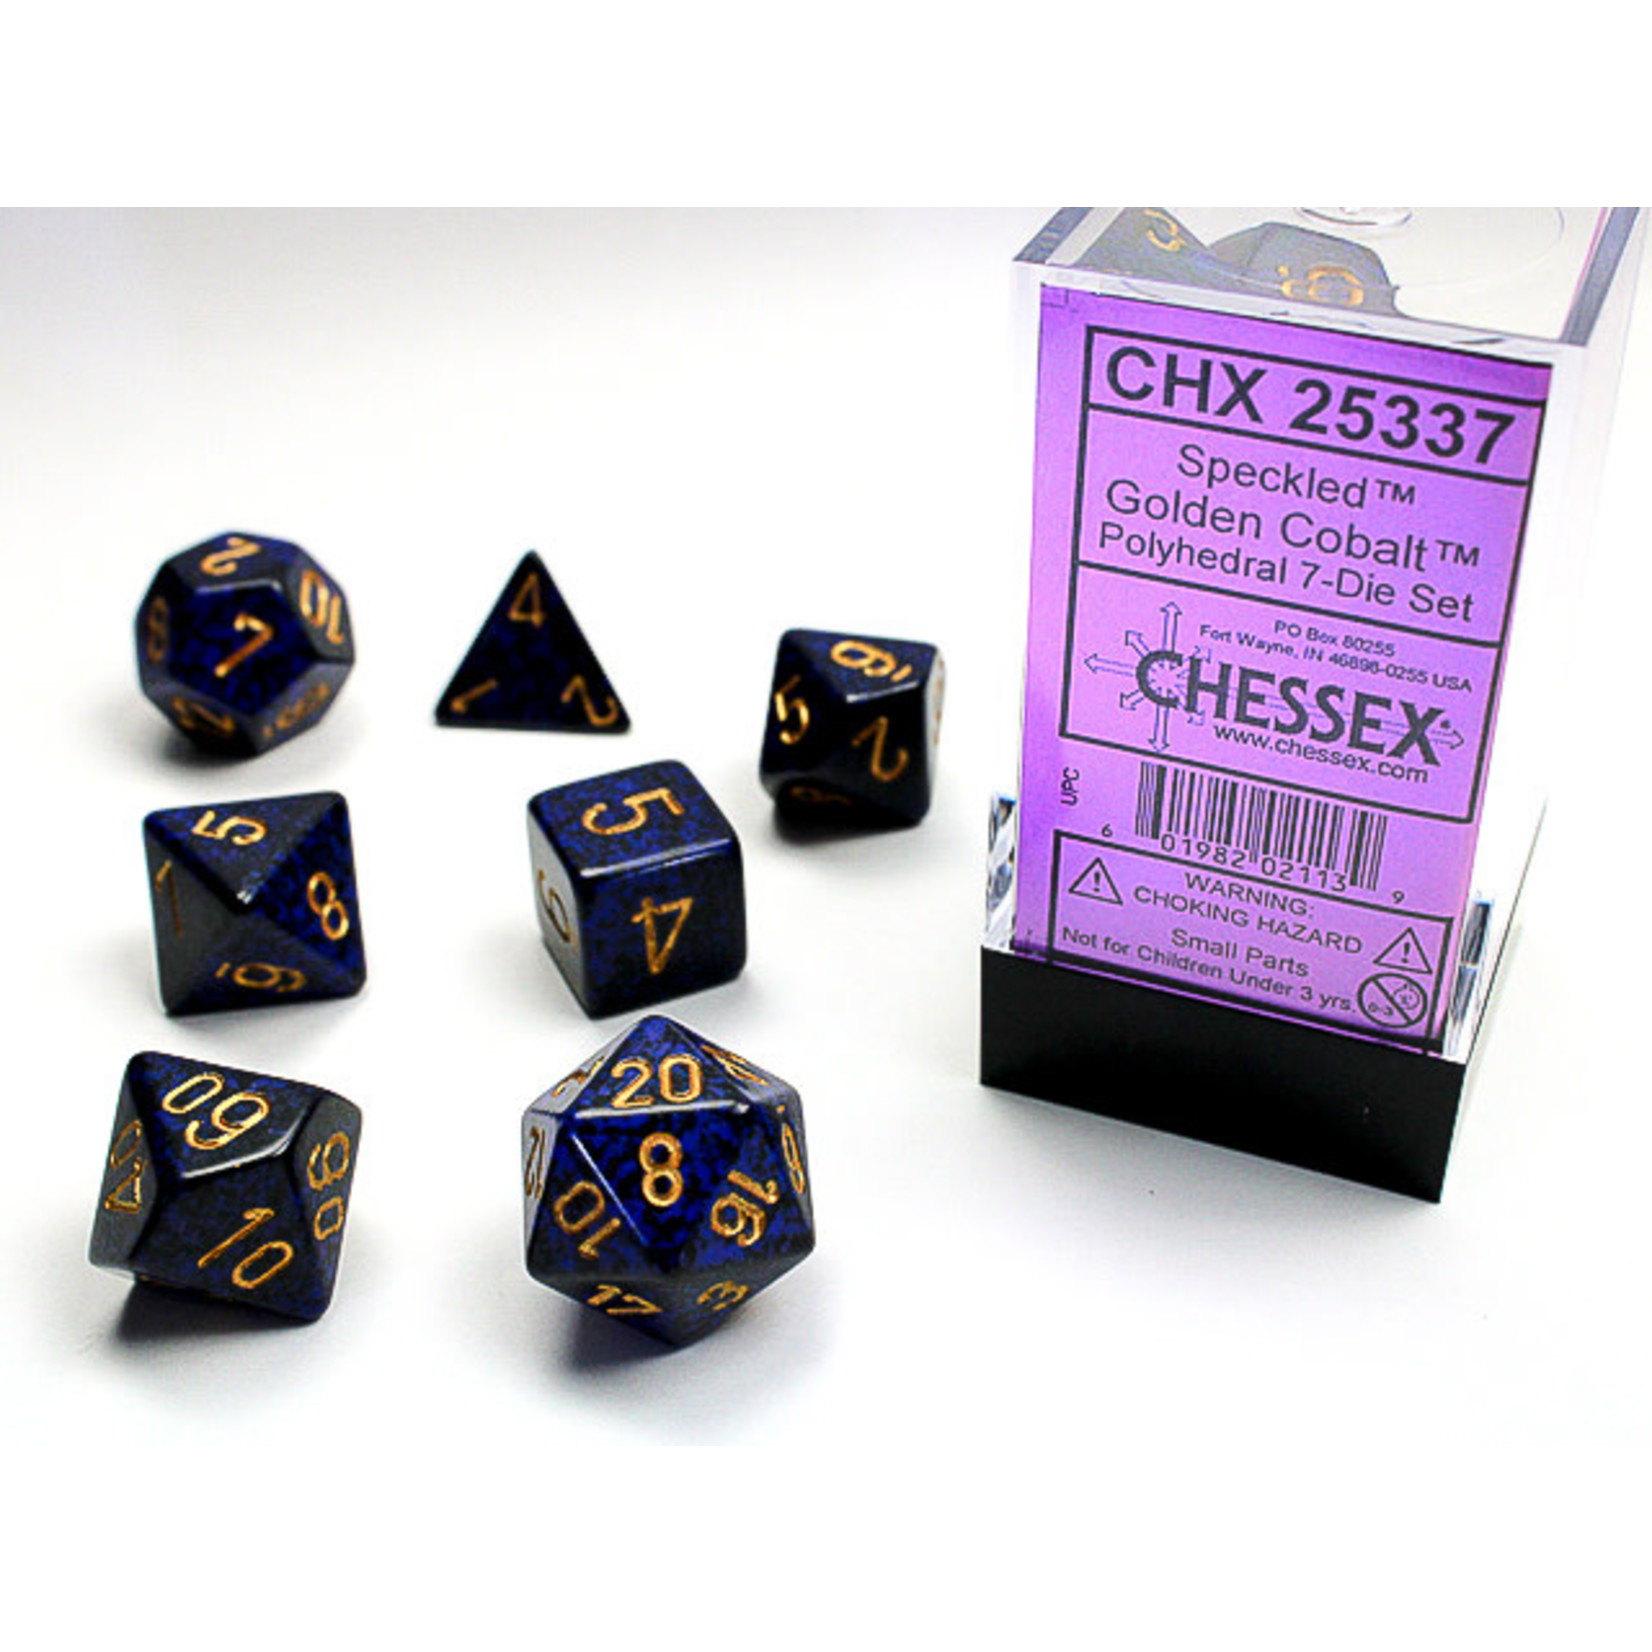 Chessex 25337 Speckled 7pc Golden Cobalt RPG Dice